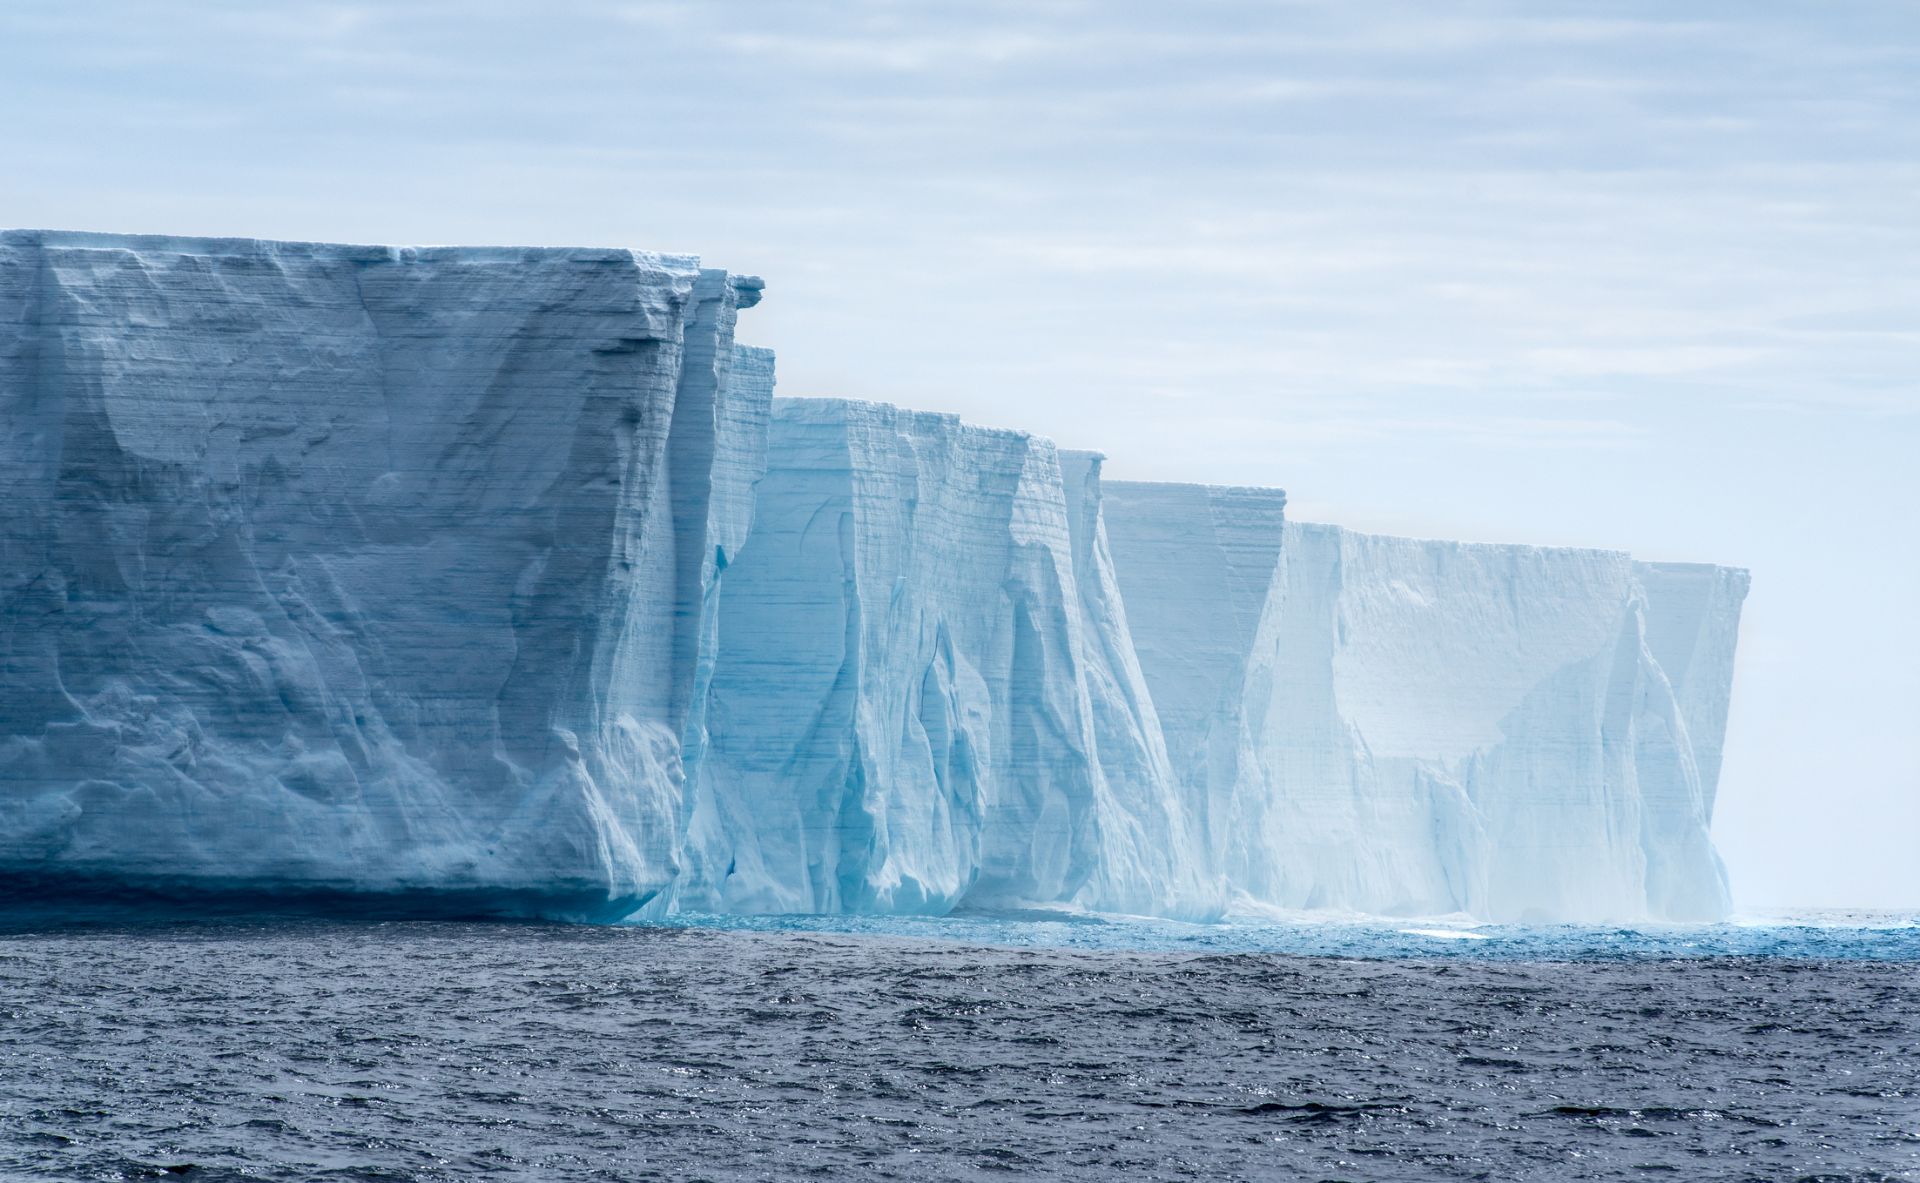 Топенето на огромен ледник може да повиши драматично морските  нива